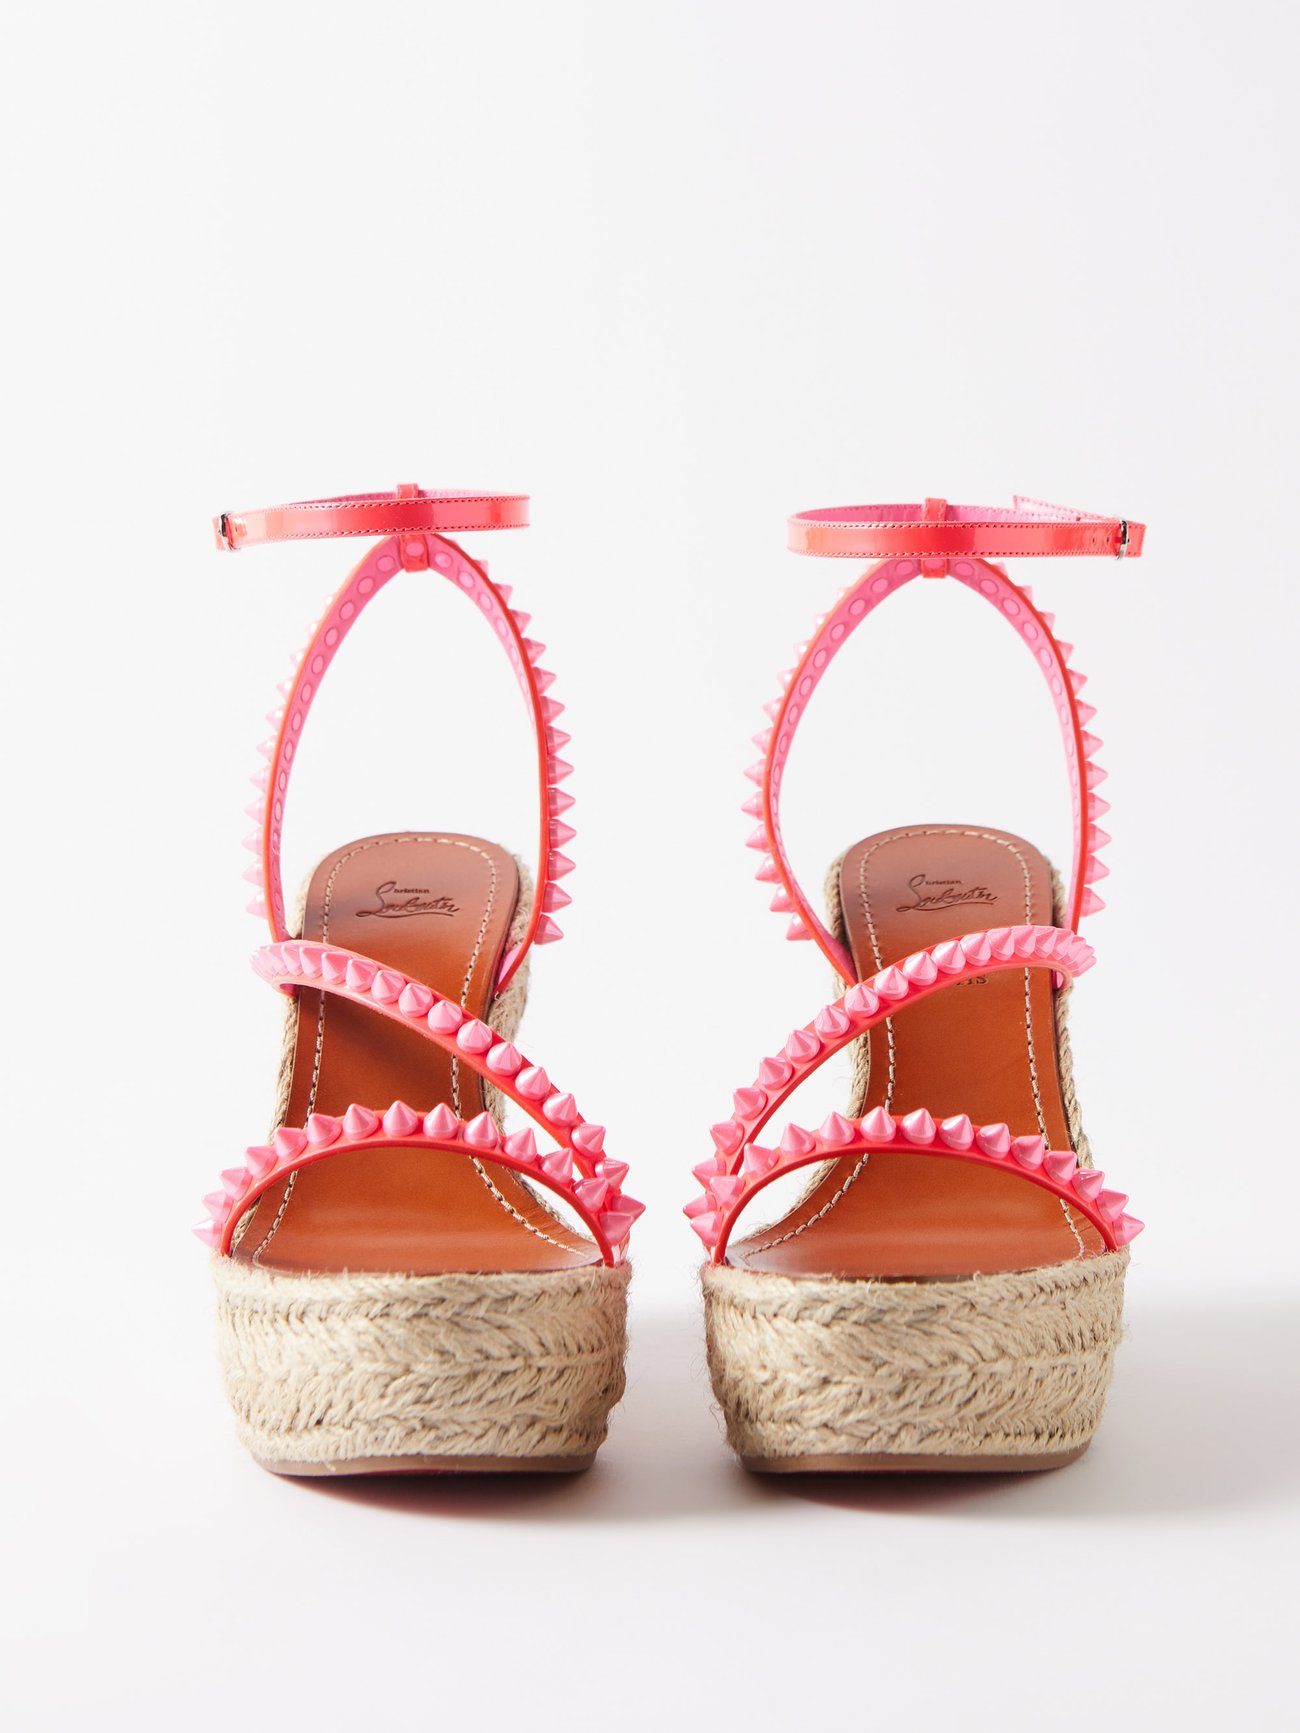 Mafaldina Zeppa 120 patent-leather wedge sandals